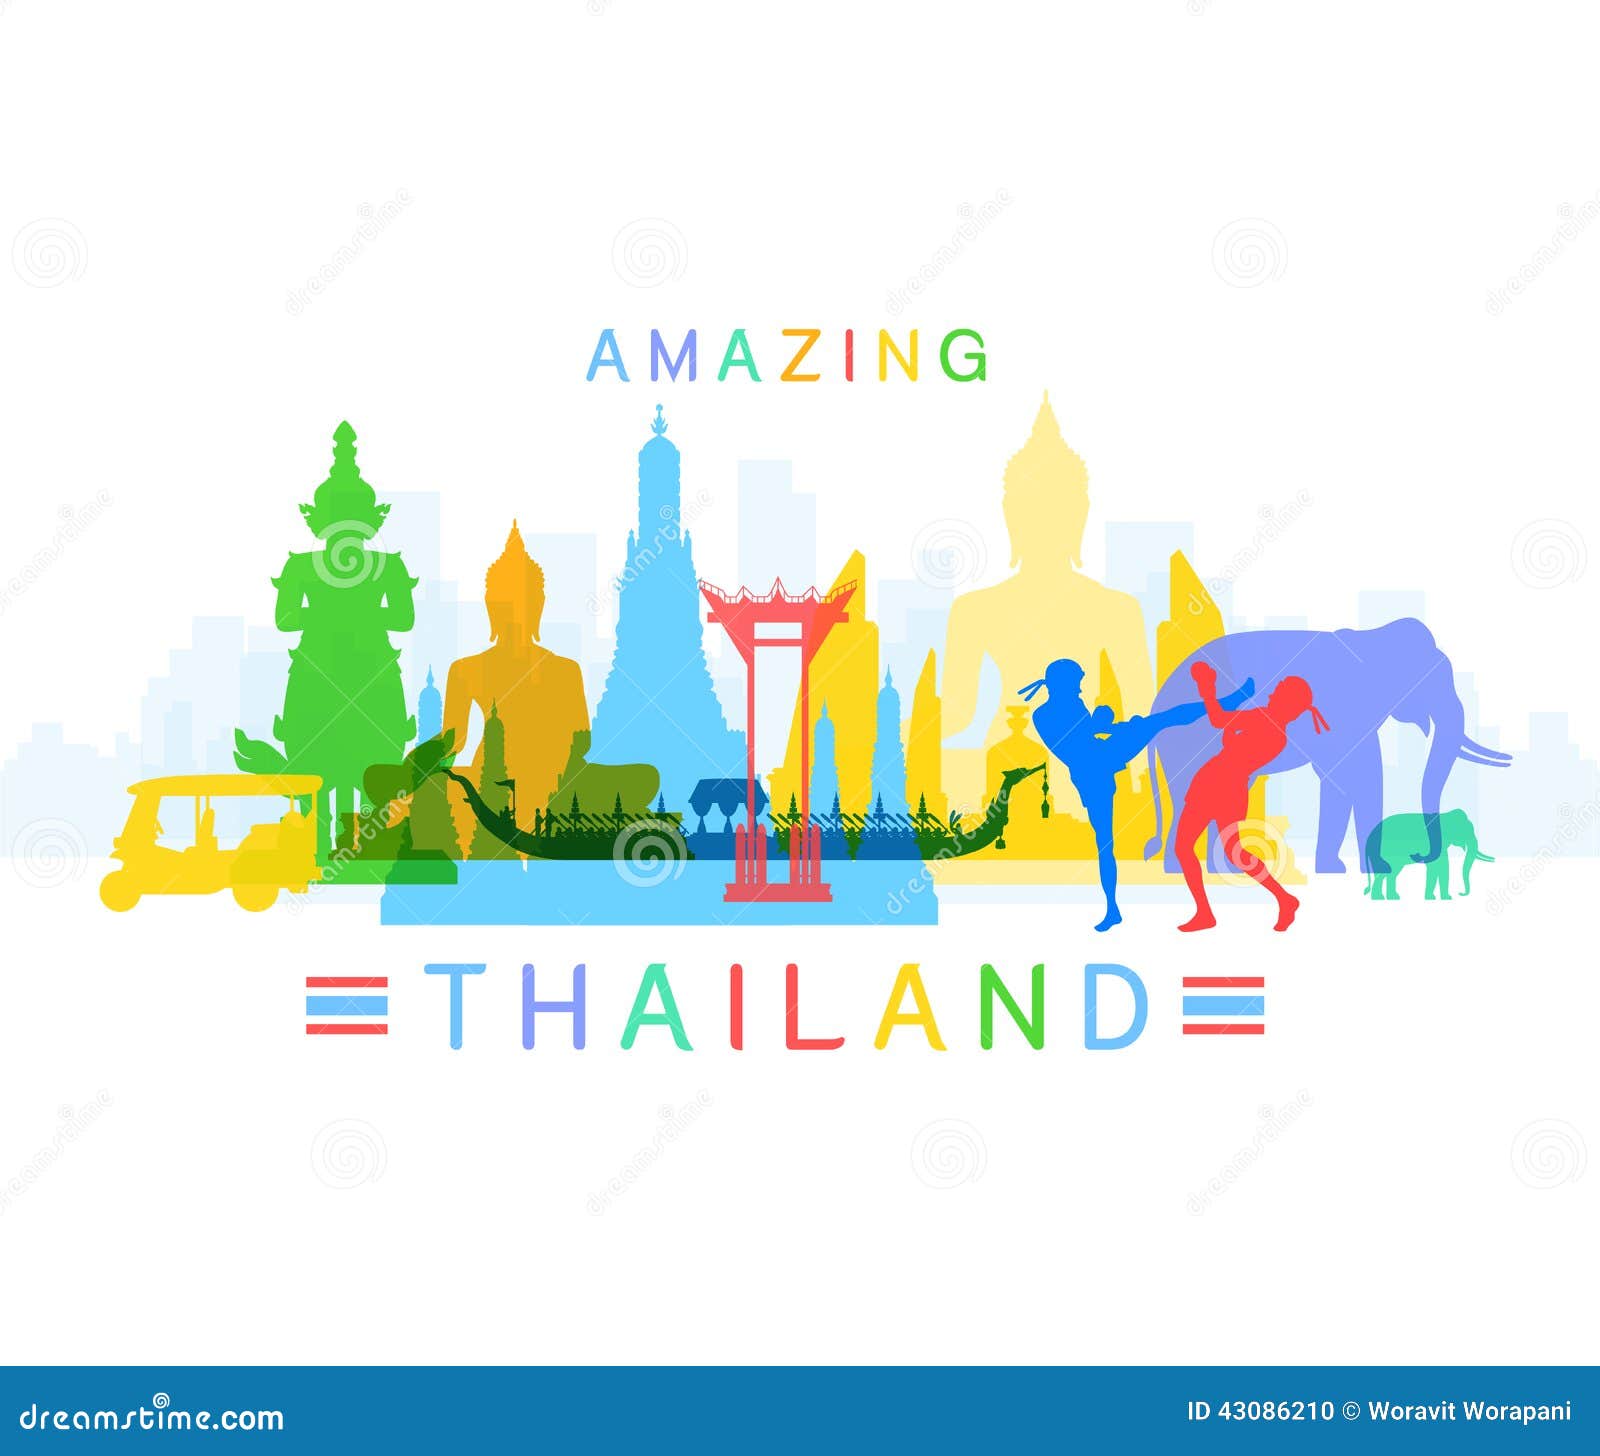 clipart thailand map - photo #30